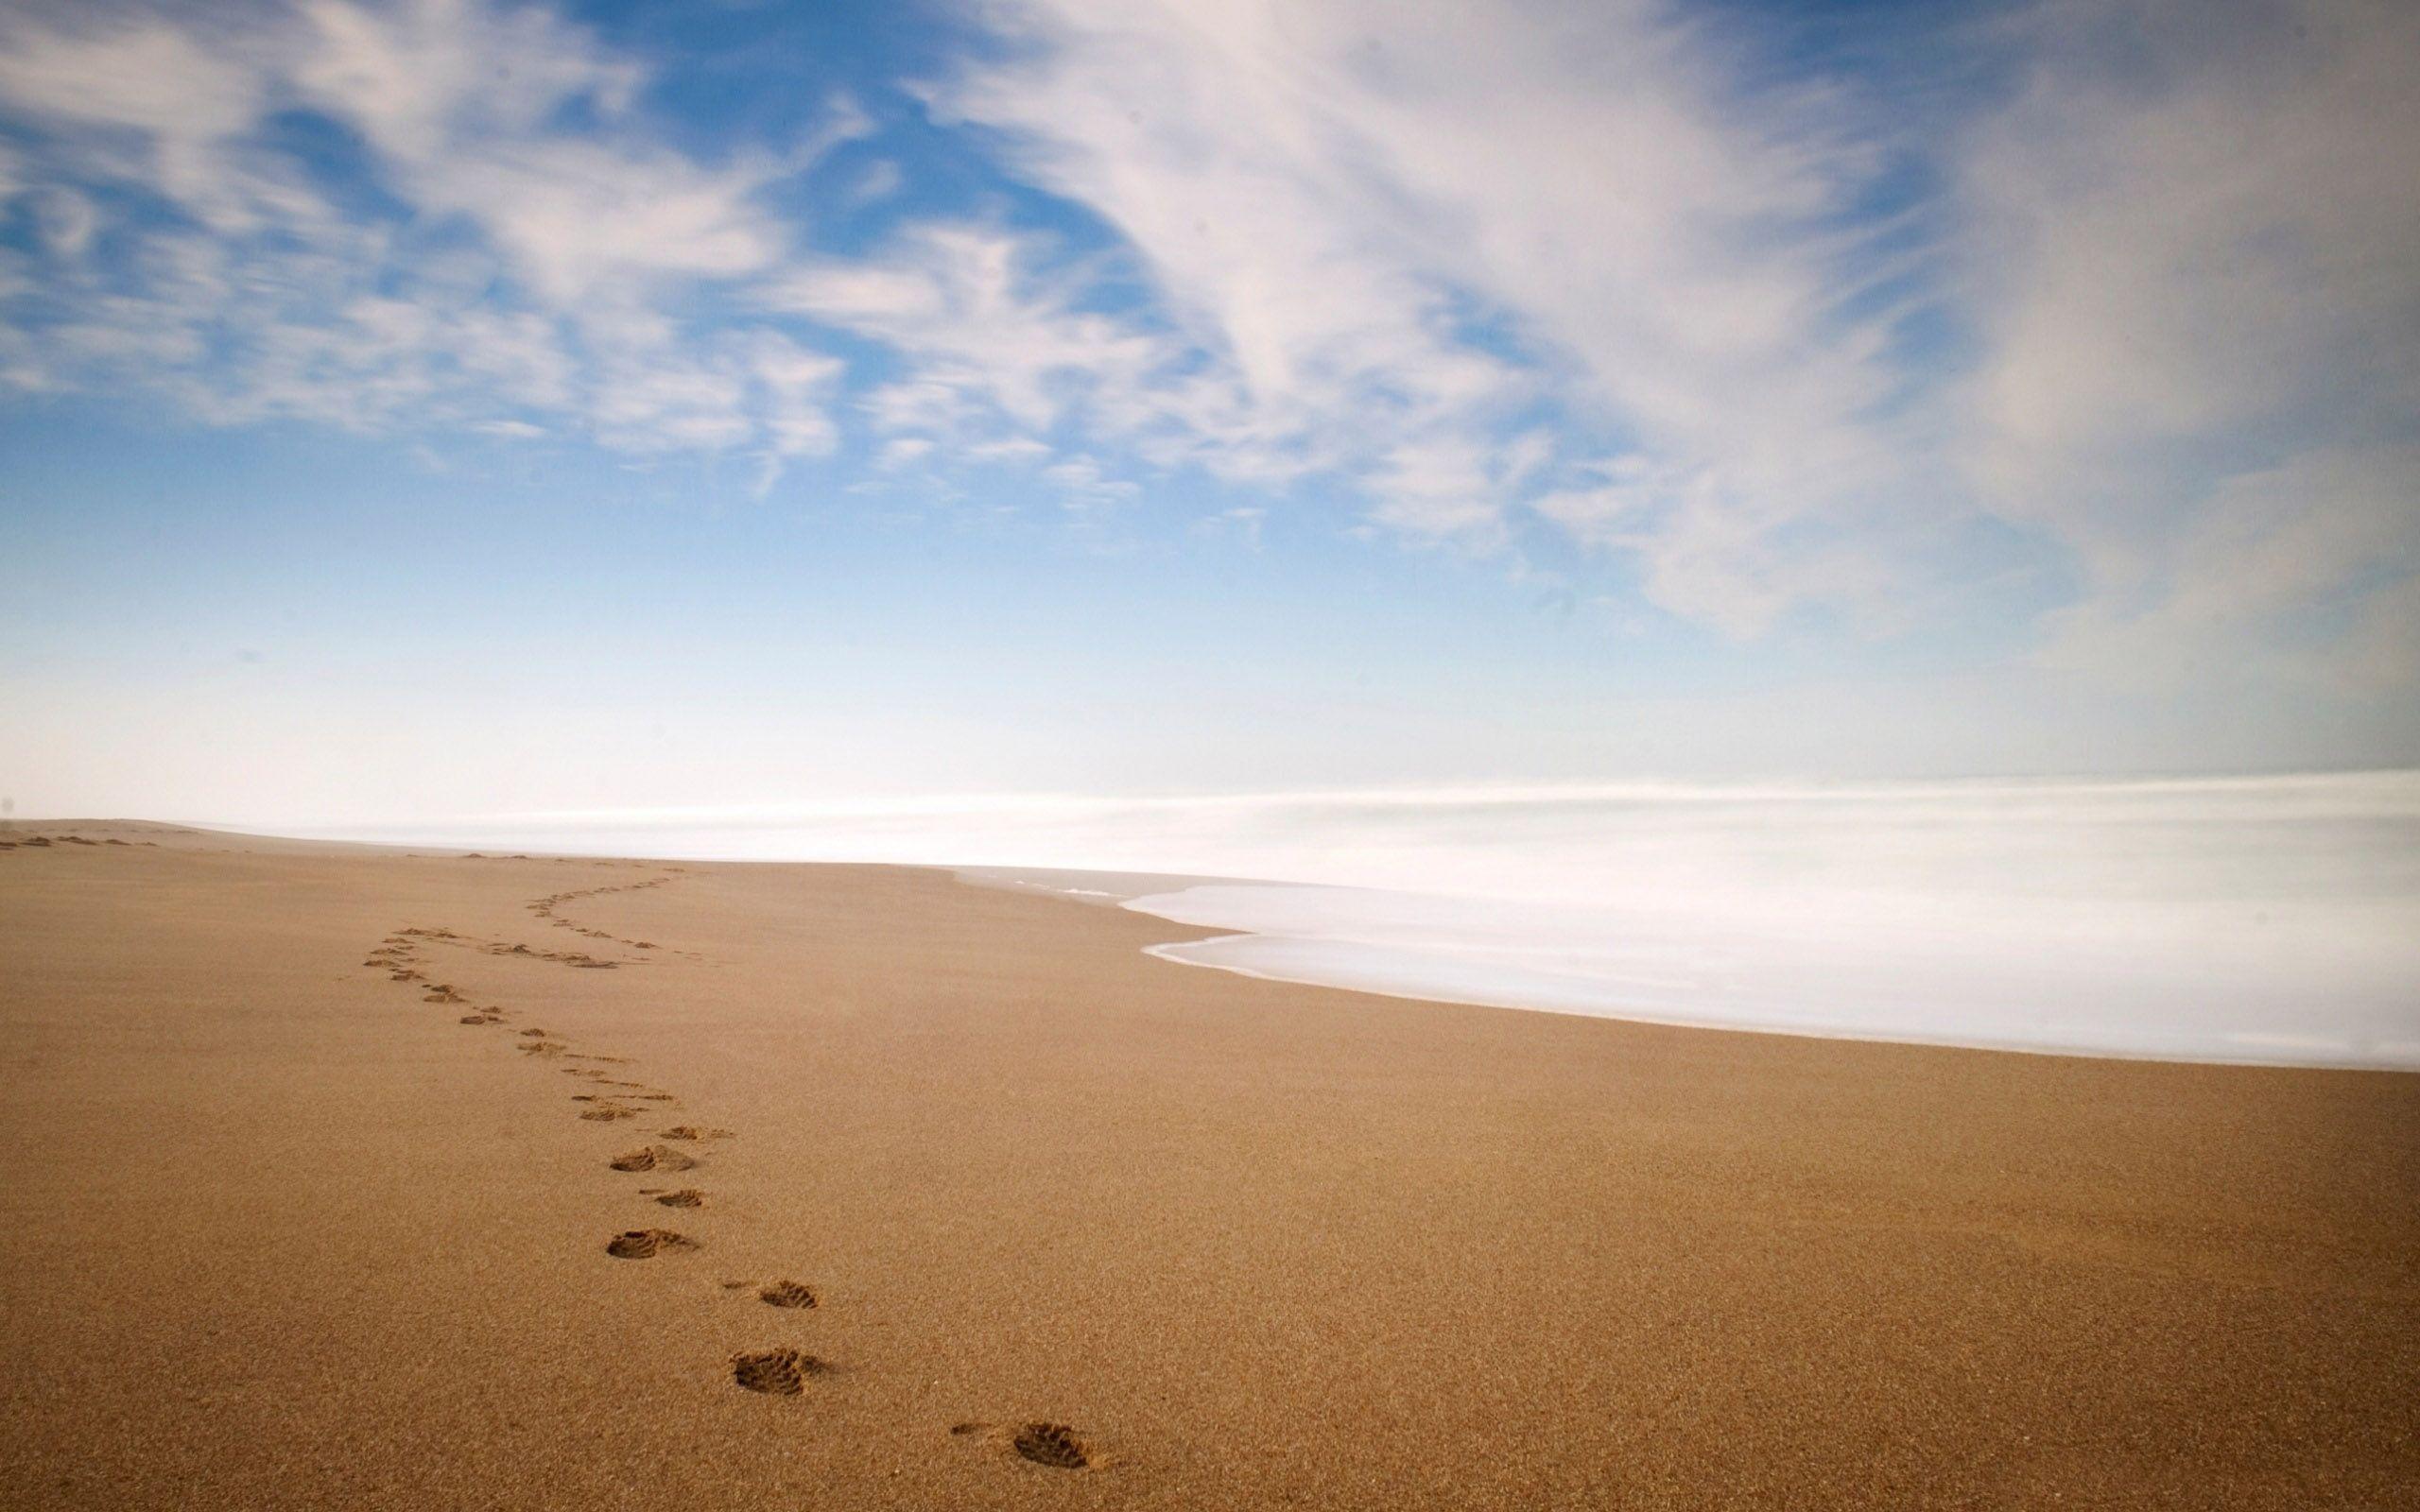 Footprints in the sand iPhone Panoramic Wallpaper. HD Wallpaper